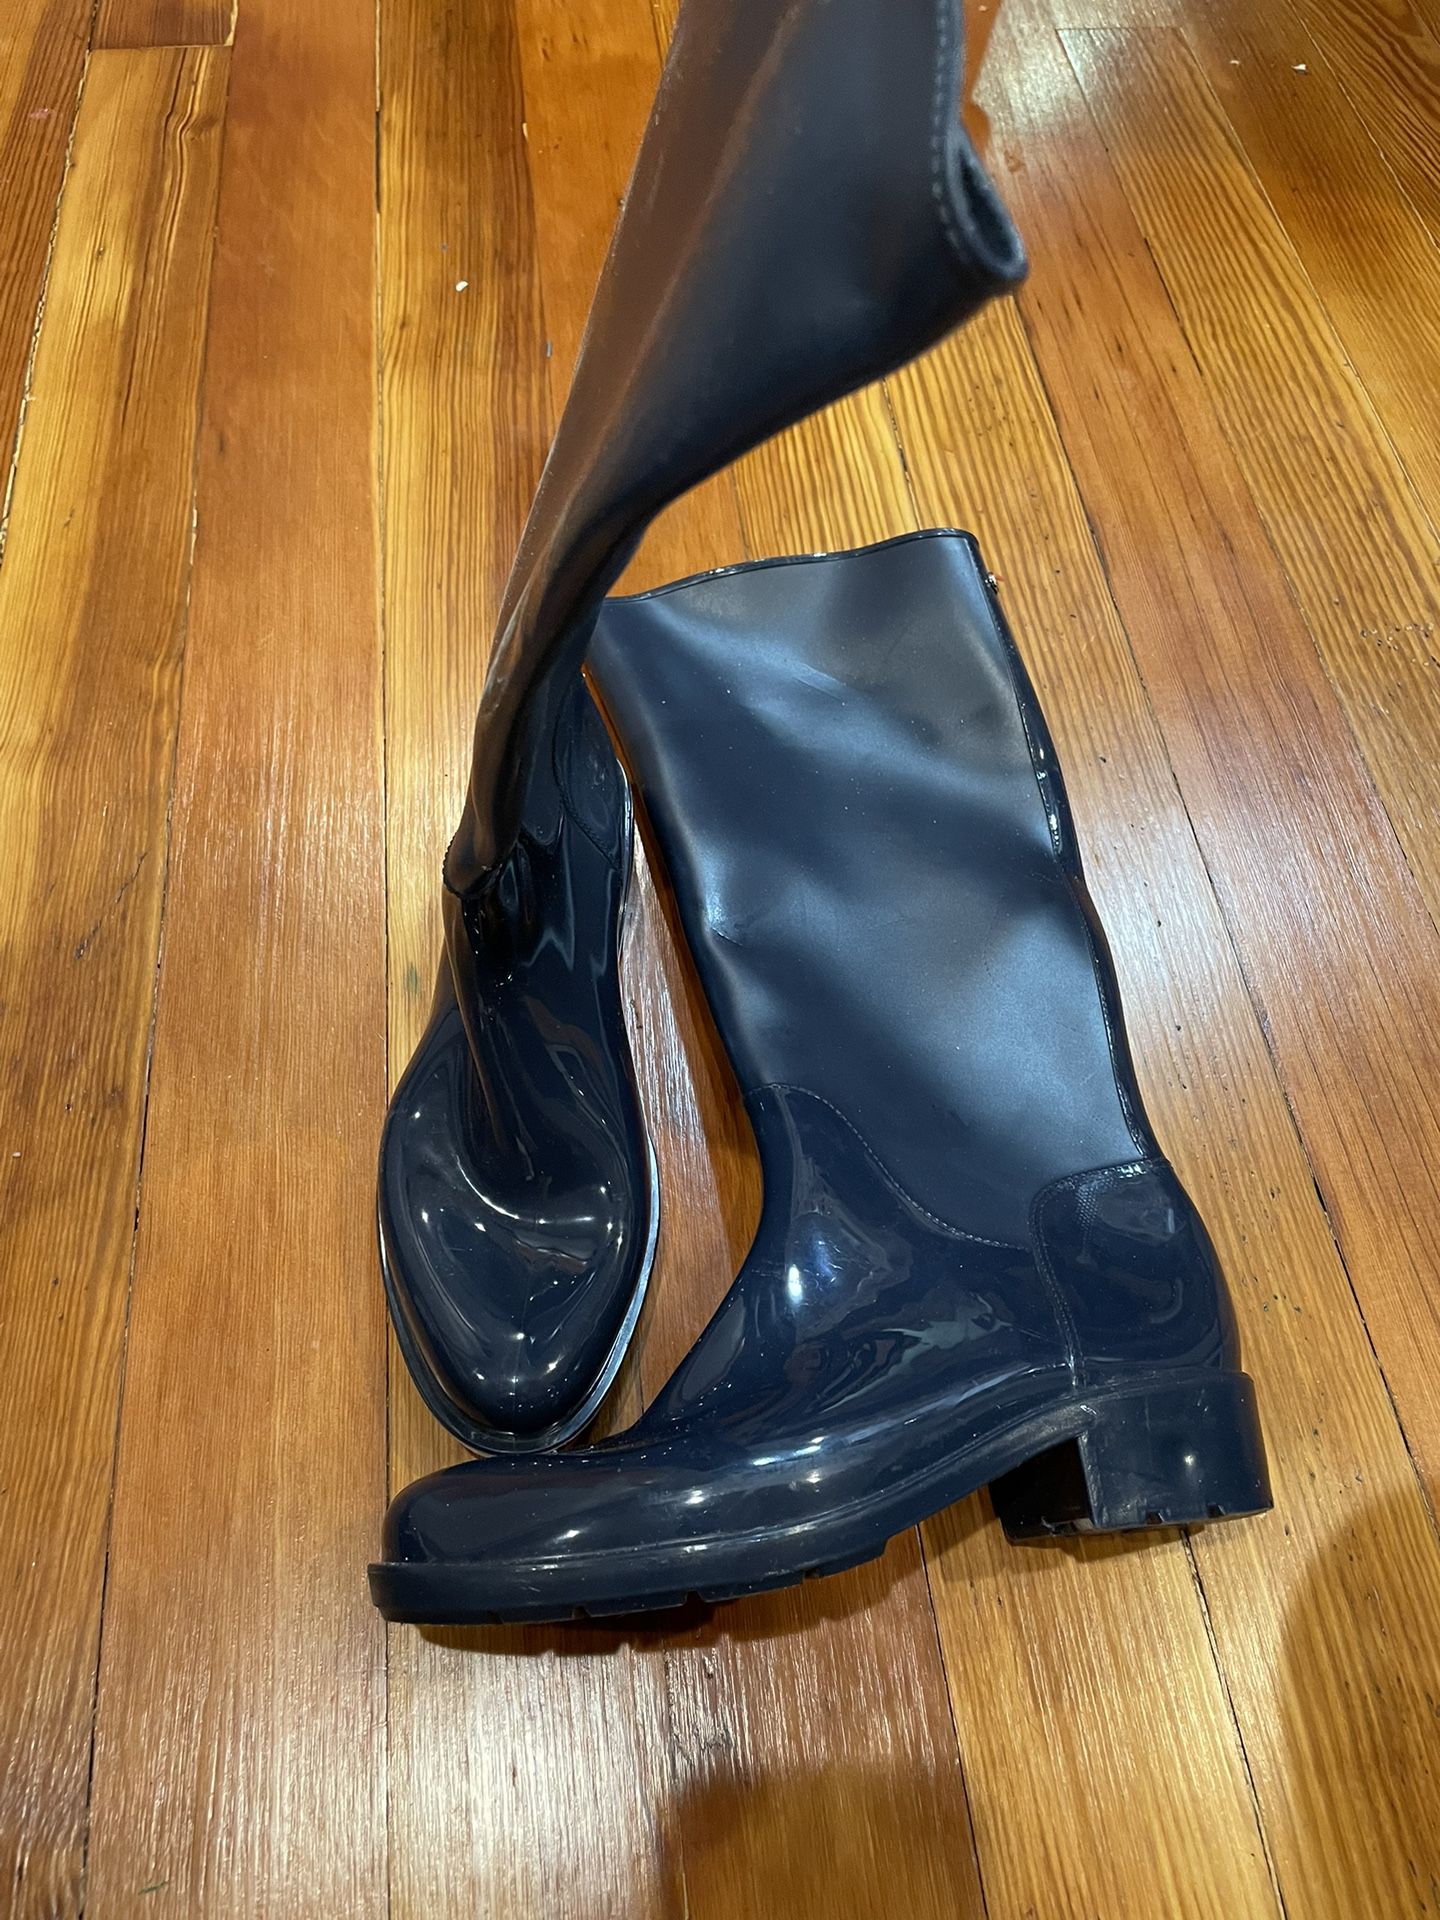 Sam Edelman rubber boots